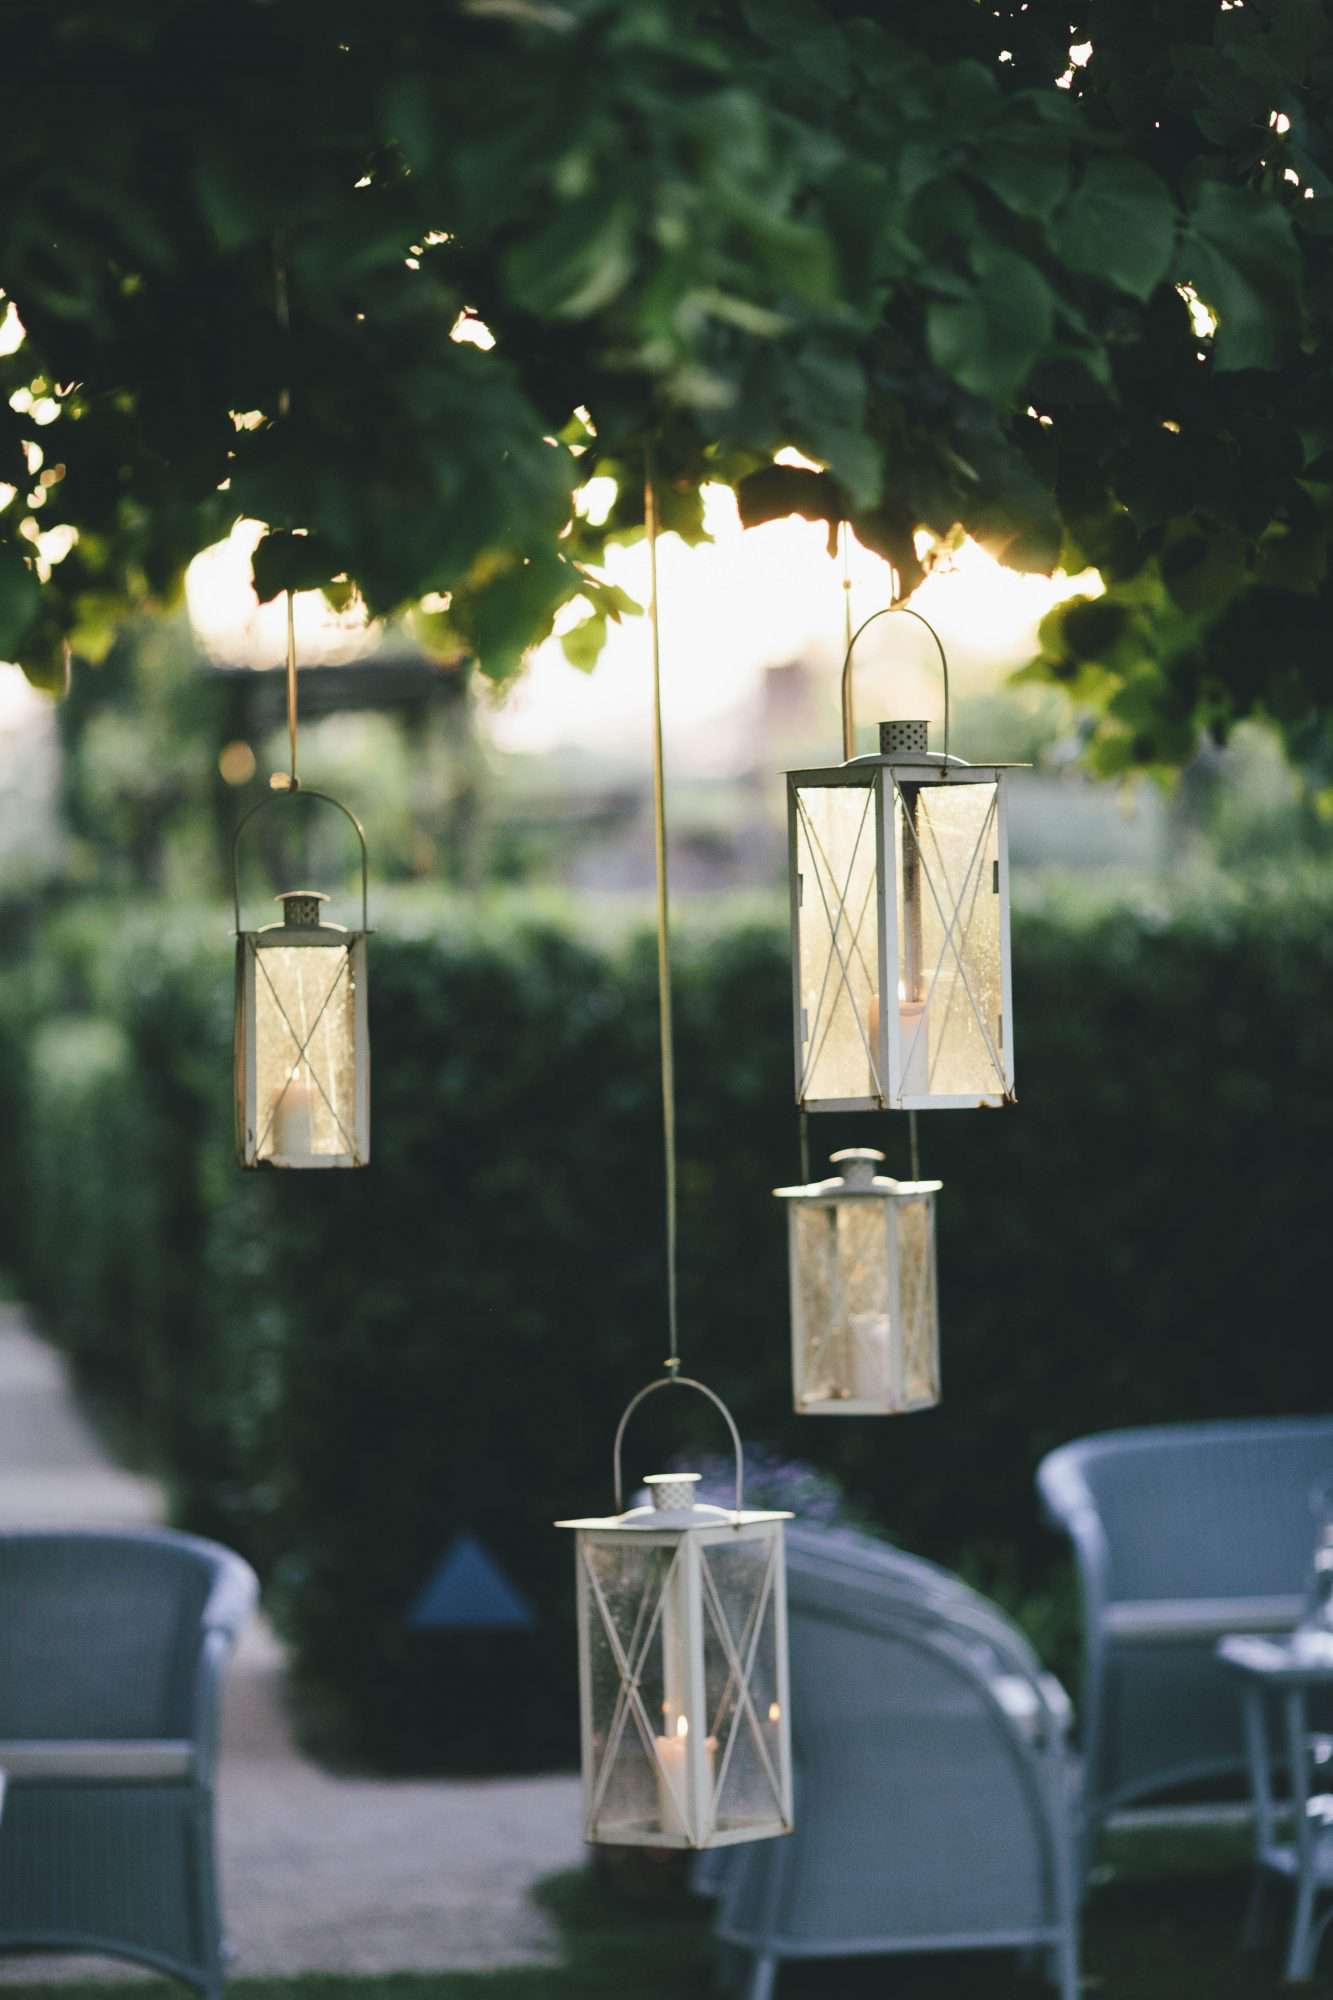 lanterns hanging from trees